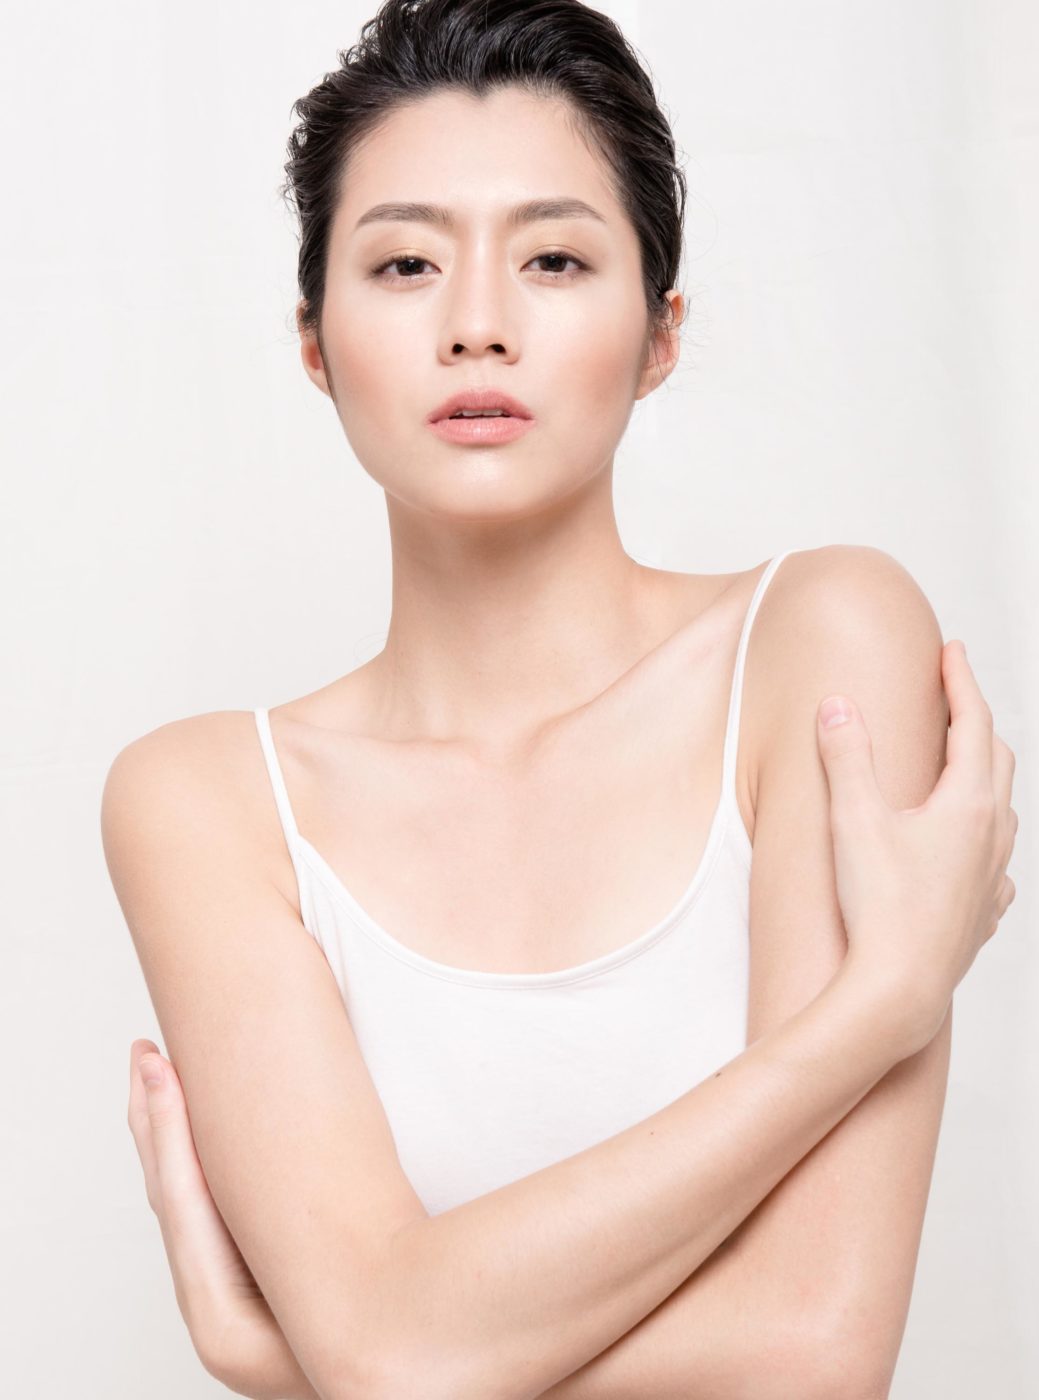 Charmaine koh singapore female fashion basic models commercial jewellery book